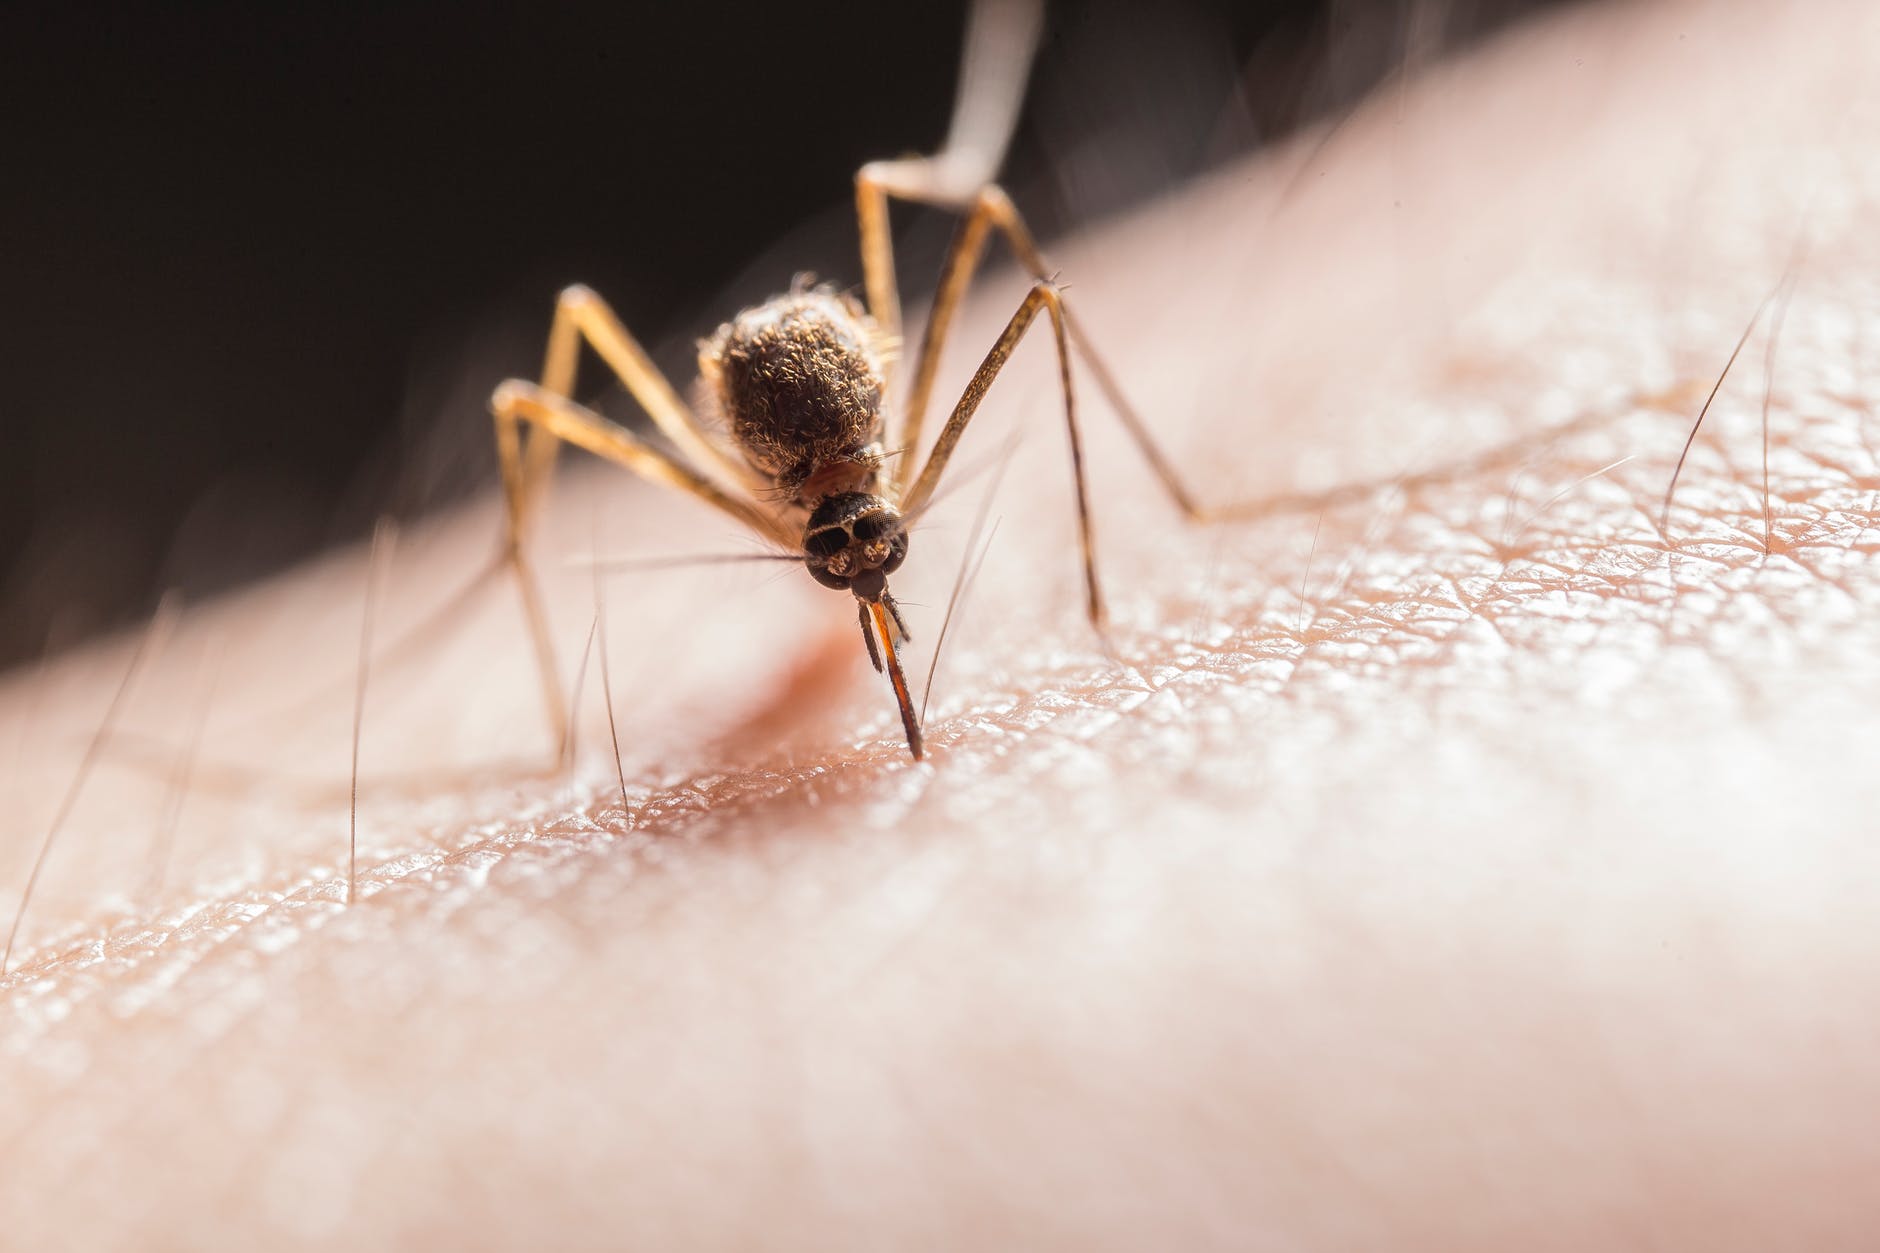 Mosquito biting on human skin